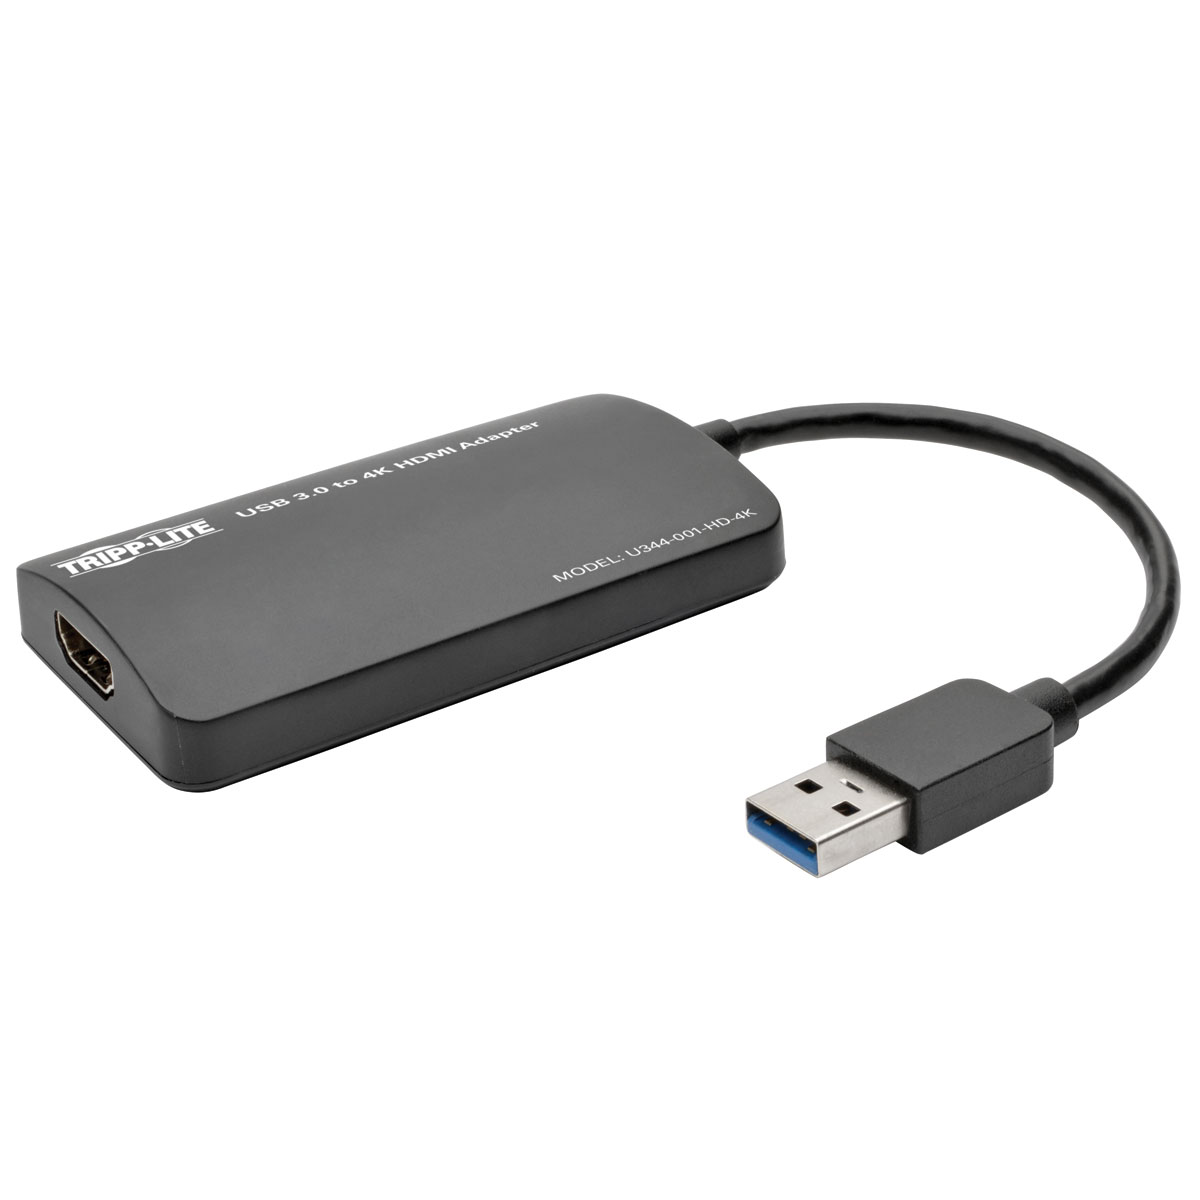 DVI VGA External Graphics Video Card Adapter USB 3.0 4K x 2K USB-C to HDMI 